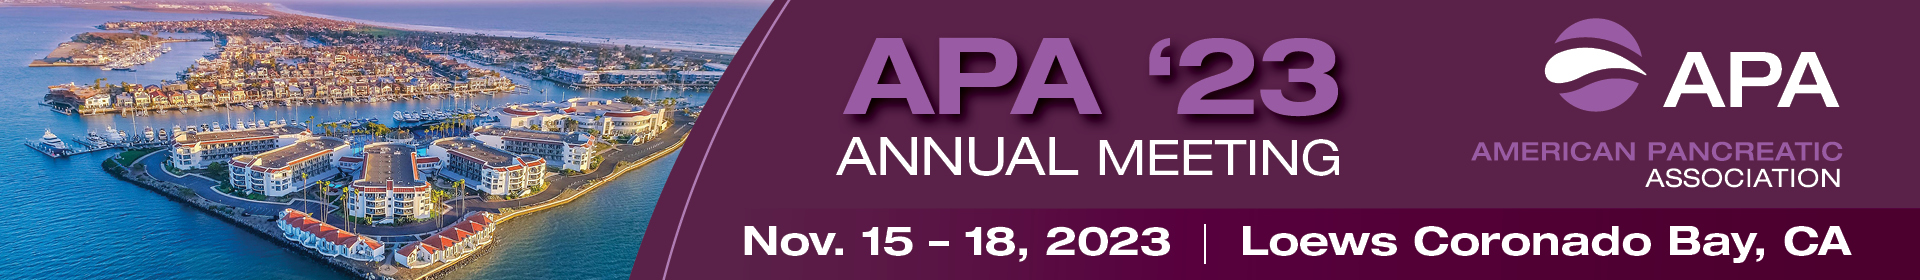 APA 2023 Annual Meeting Event Banner